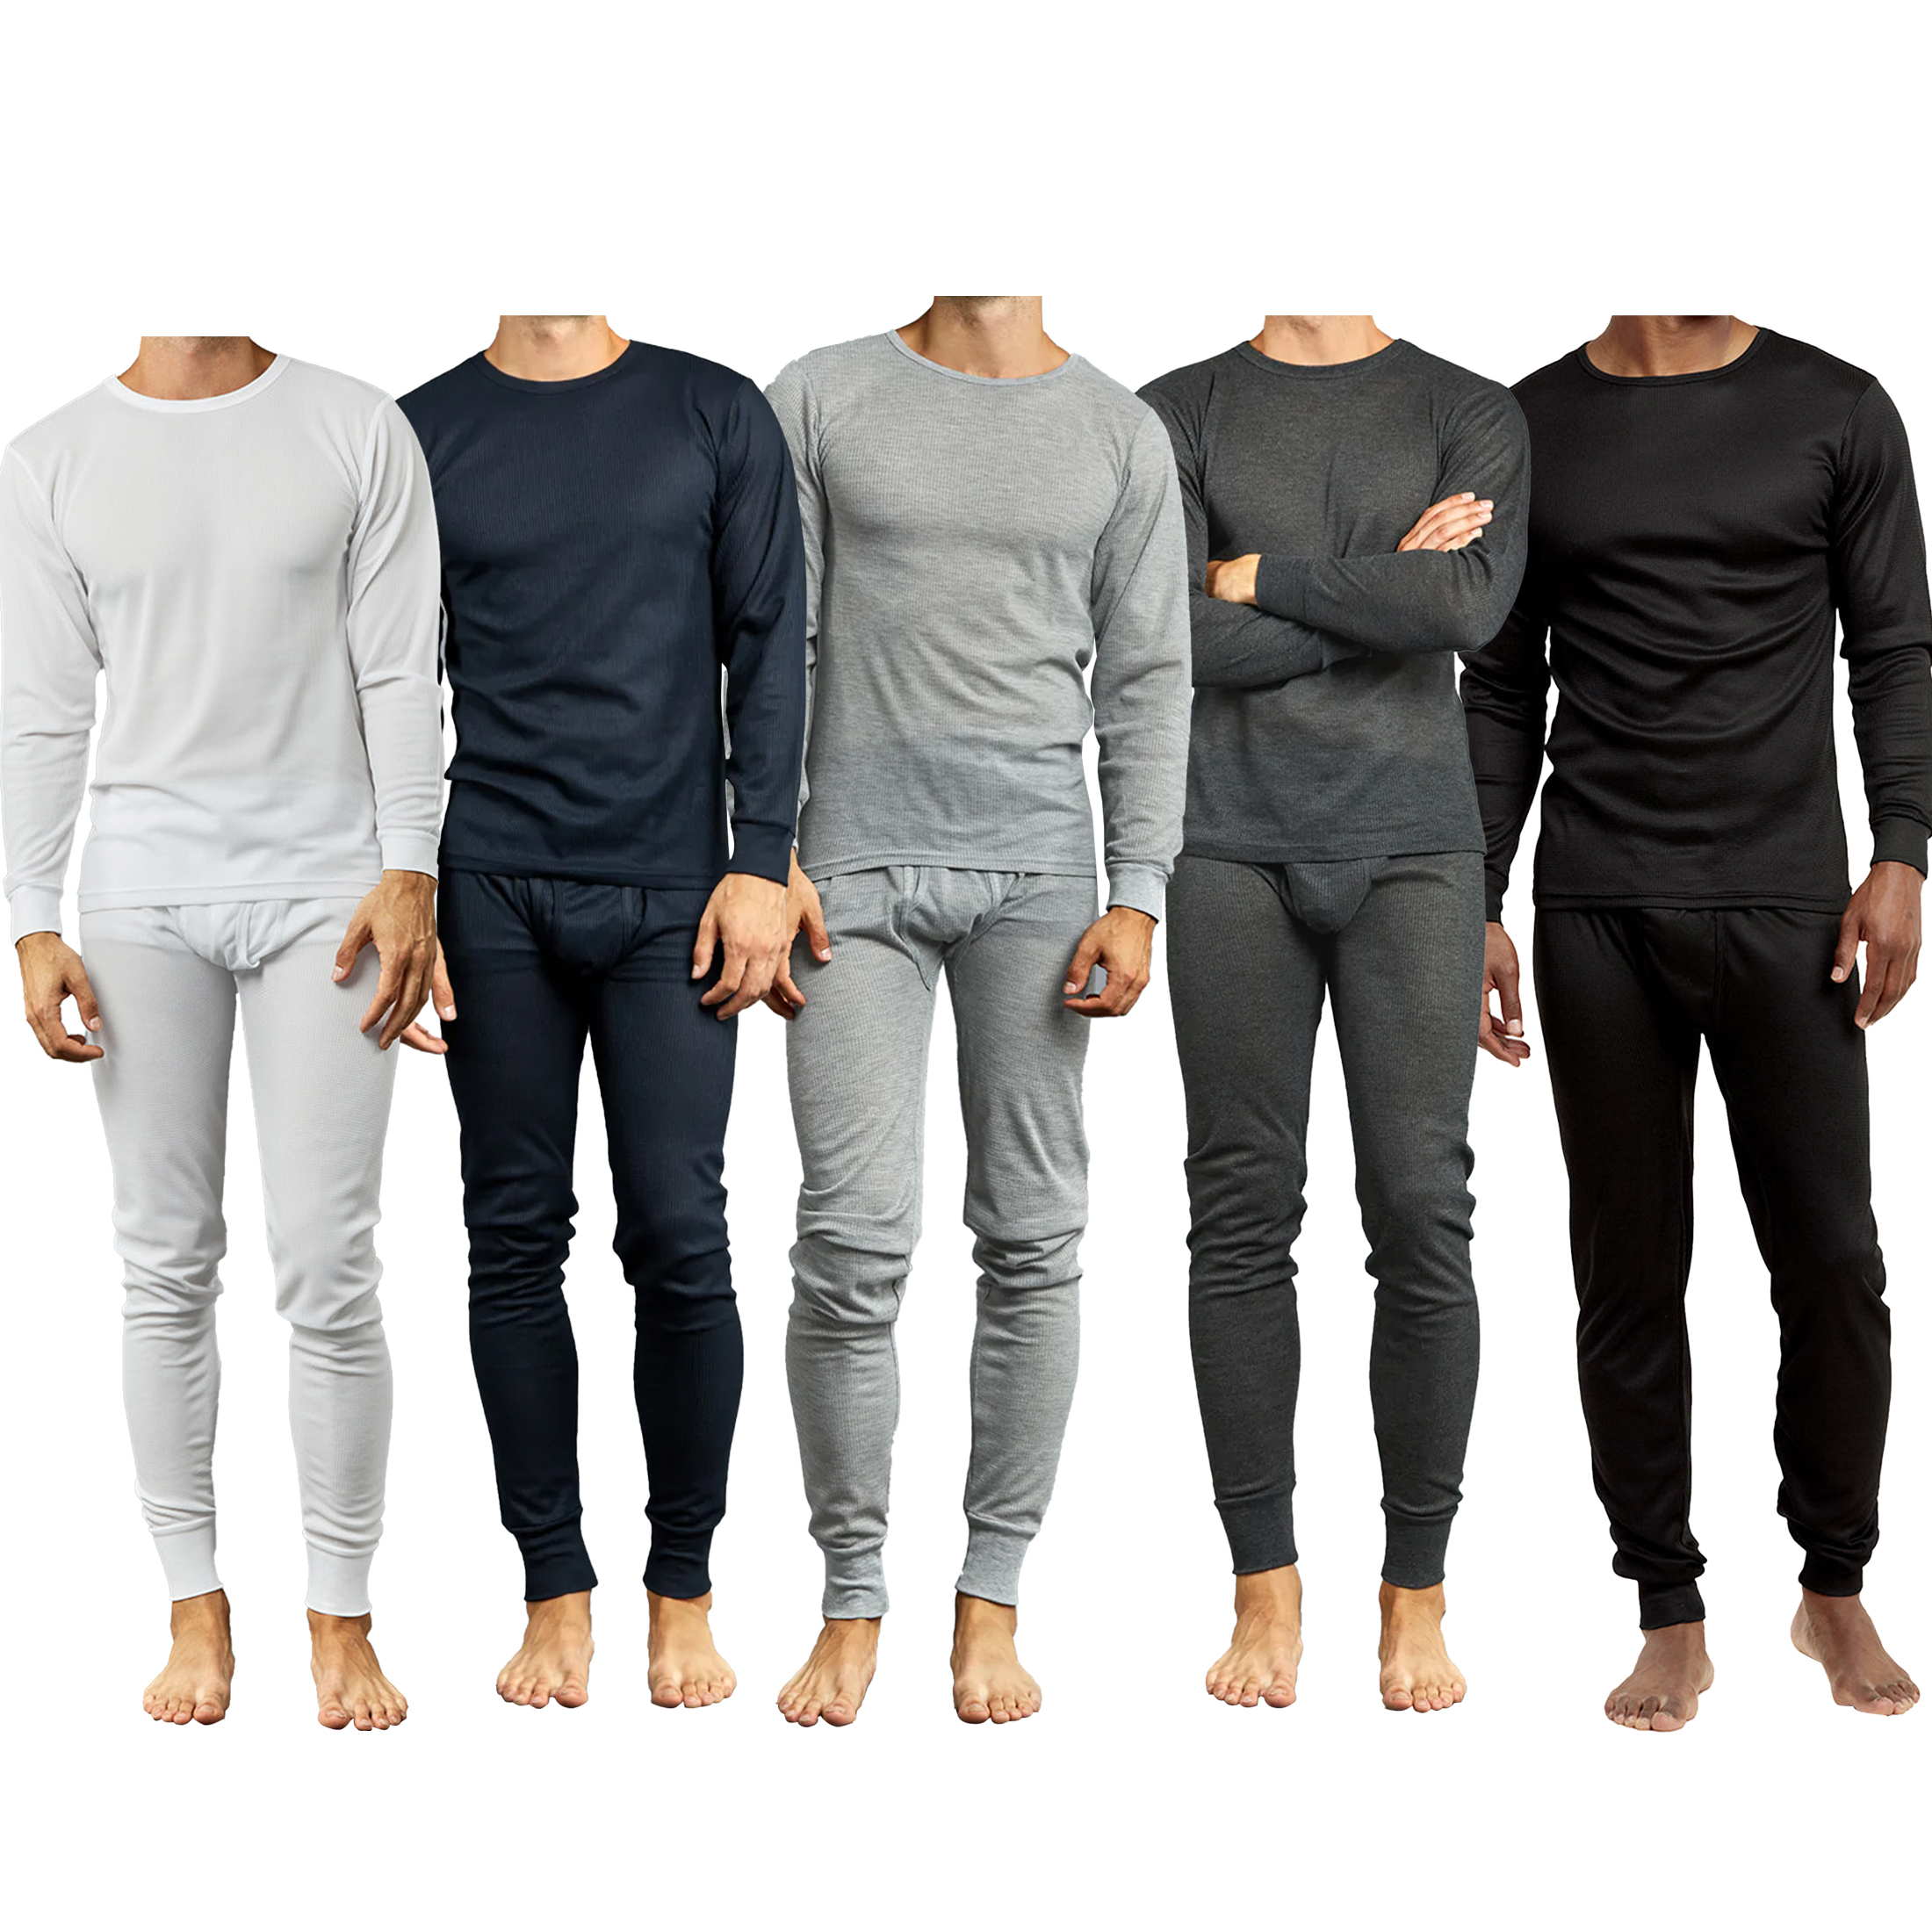 2-Piece: Men's Moisture Wicking Long Johns Base Layer Thermal Underwear Set (Top & Bottom) - Navy, Medium